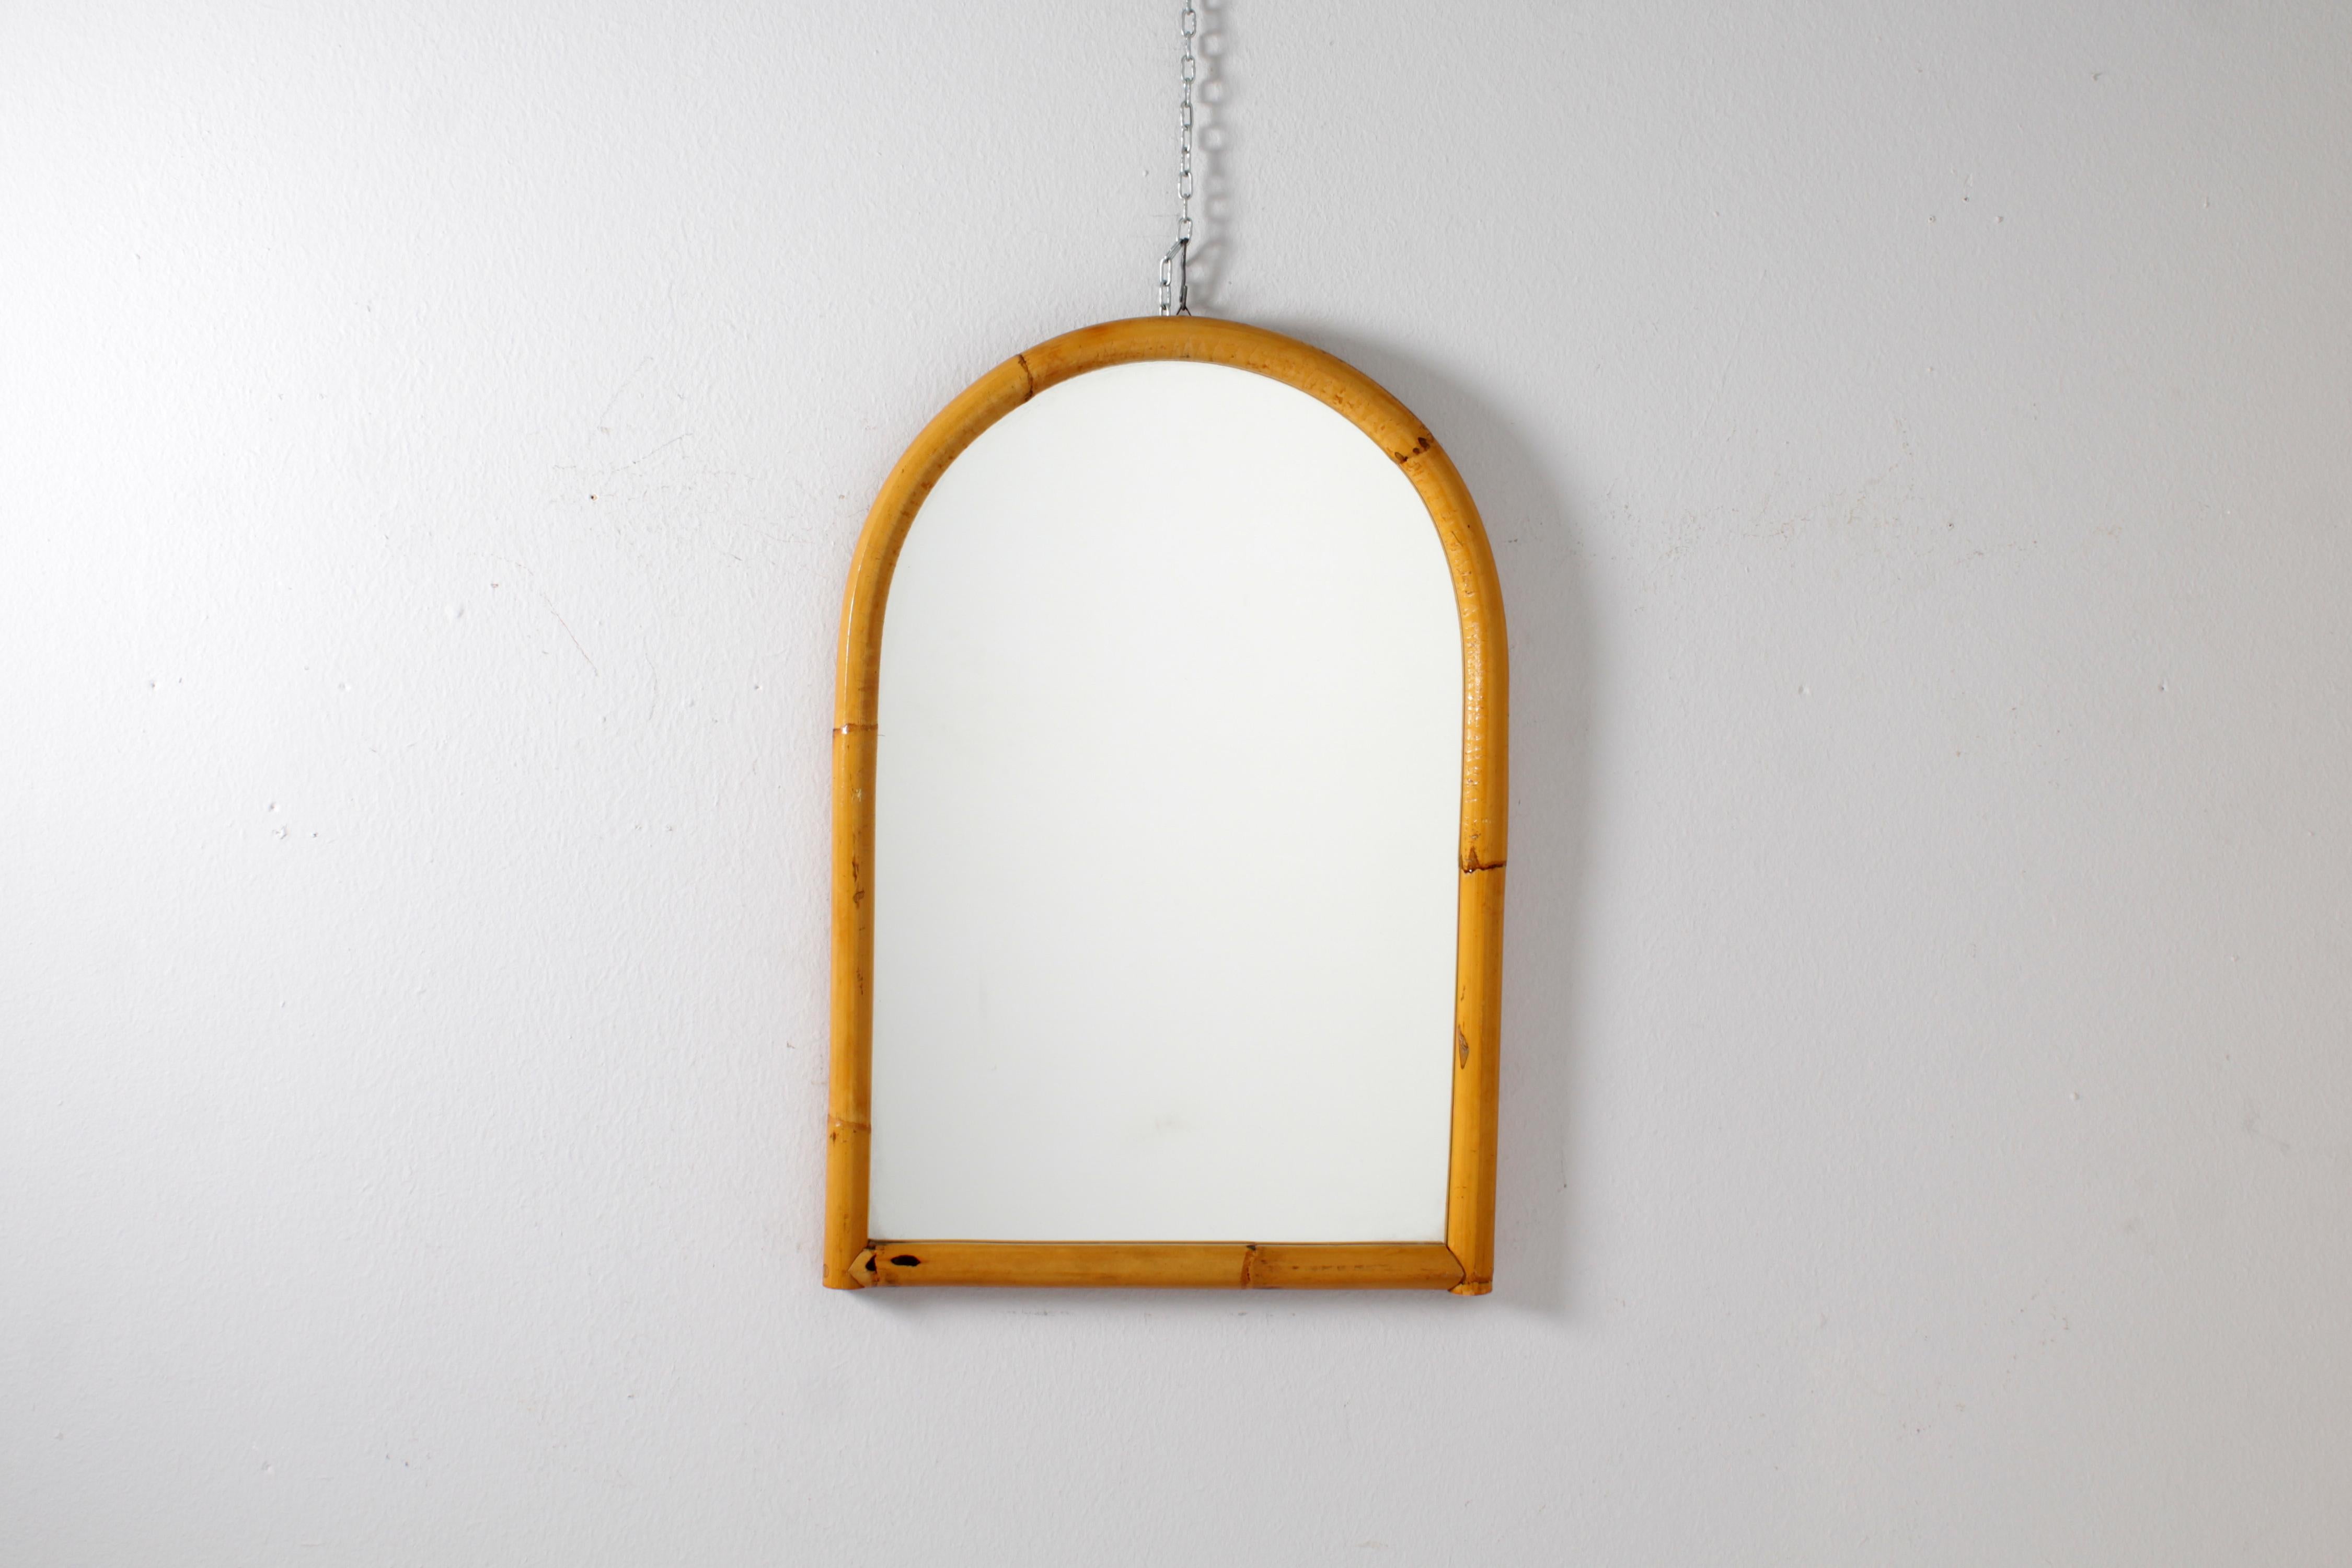 Italian Mid-Century Bonacina Style Bamboo Cane Arched Wall Mirror, 60s Italy For Sale